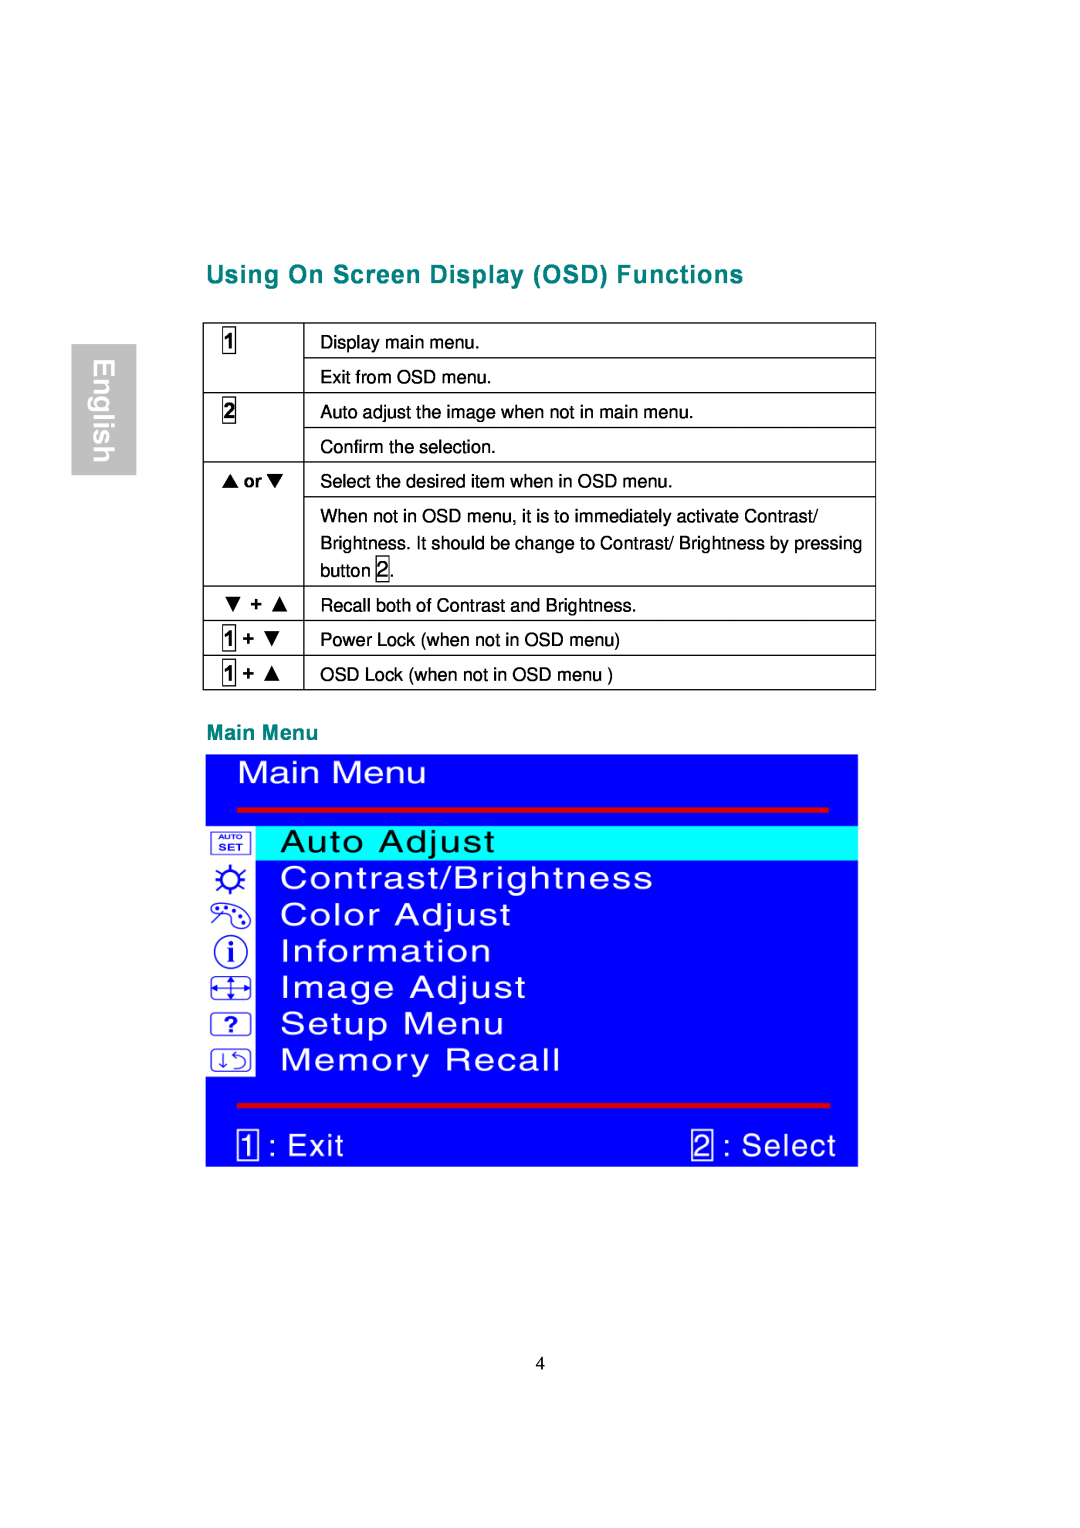 AOC 177S manual Using On Screen Display OSD Functions, Main Menu, English 